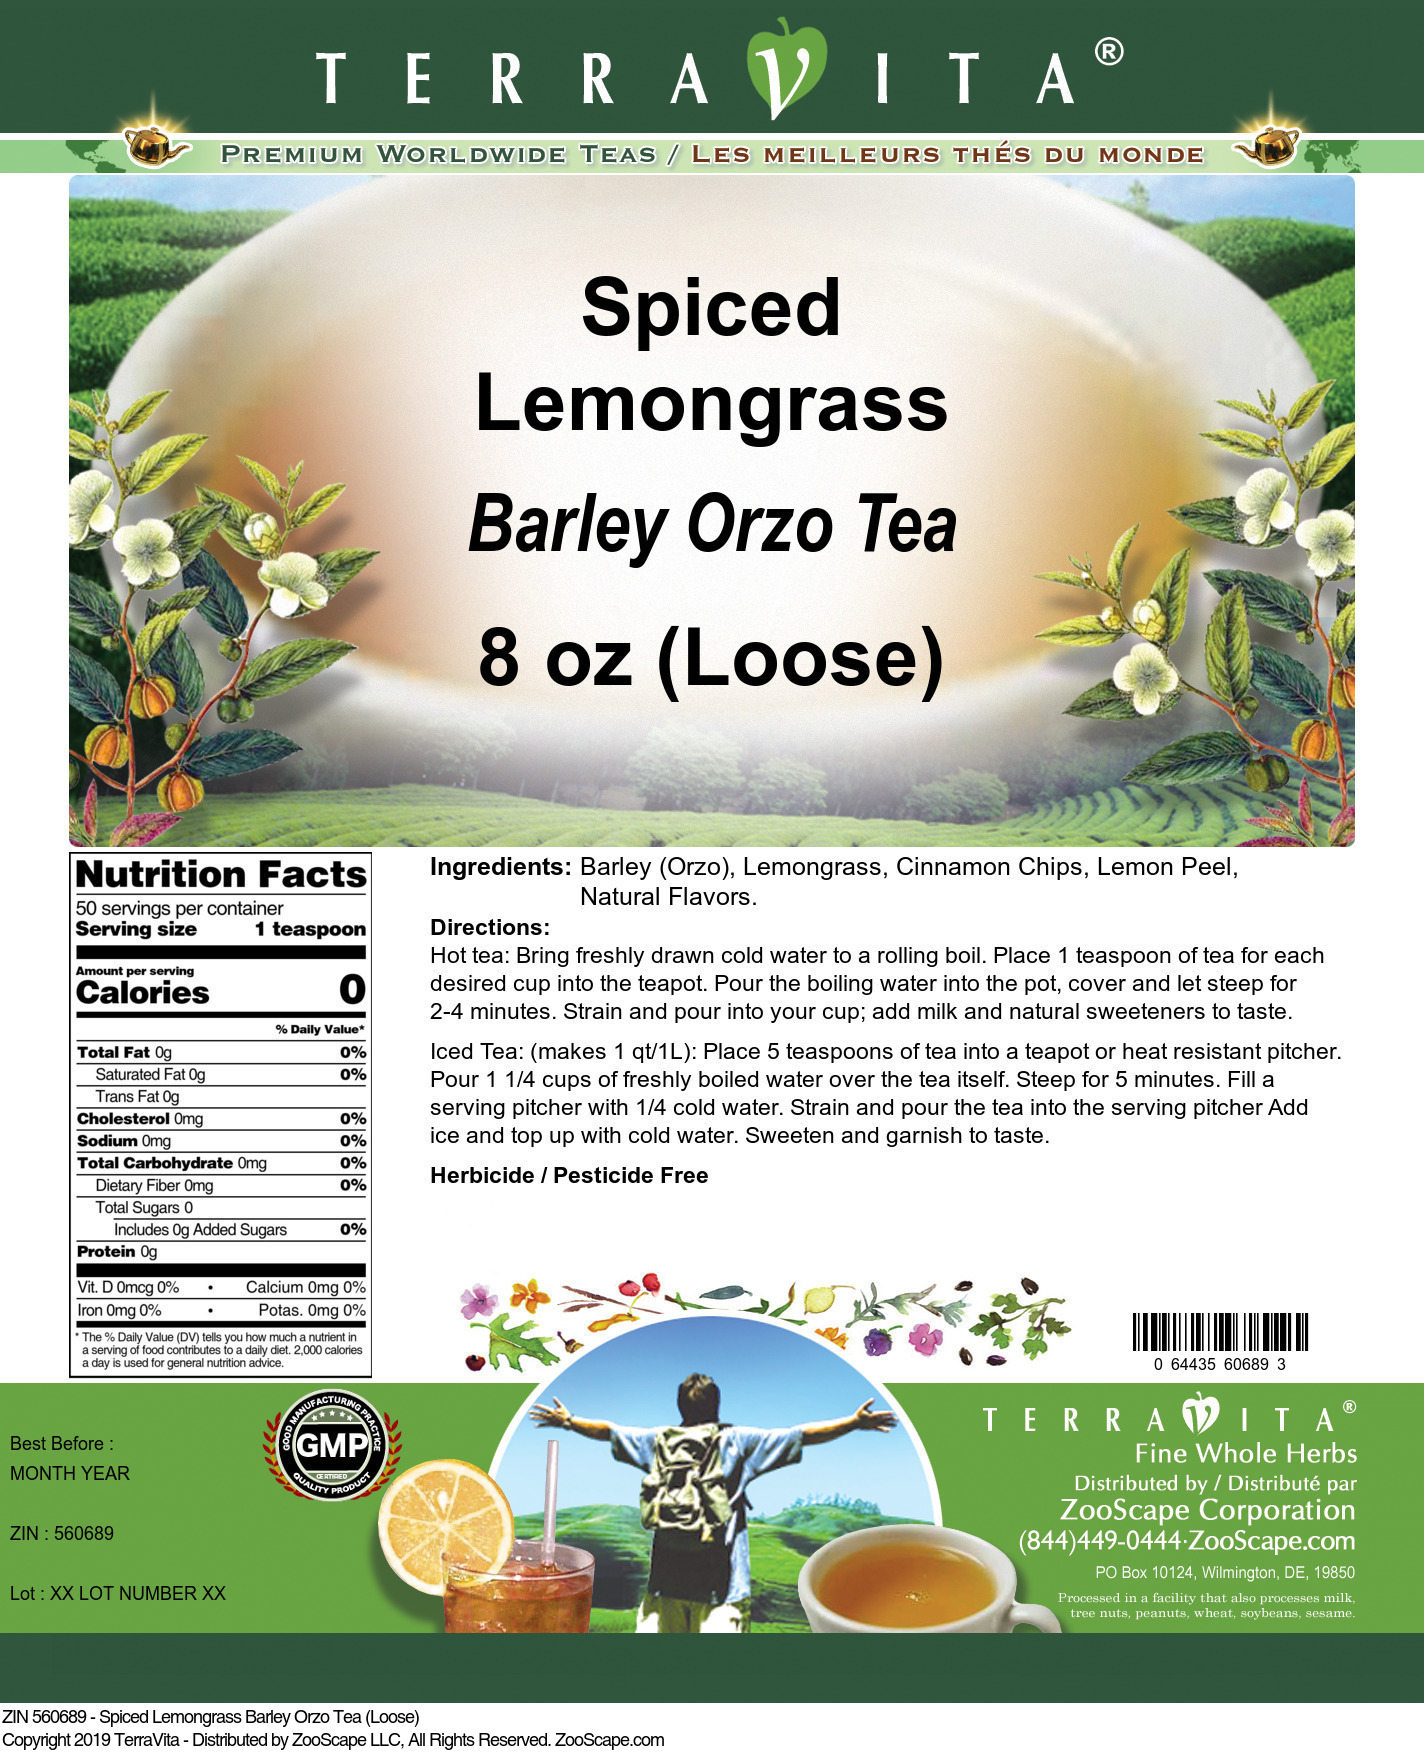 Spiced Lemongrass Barley Orzo Tea (Loose) - Label